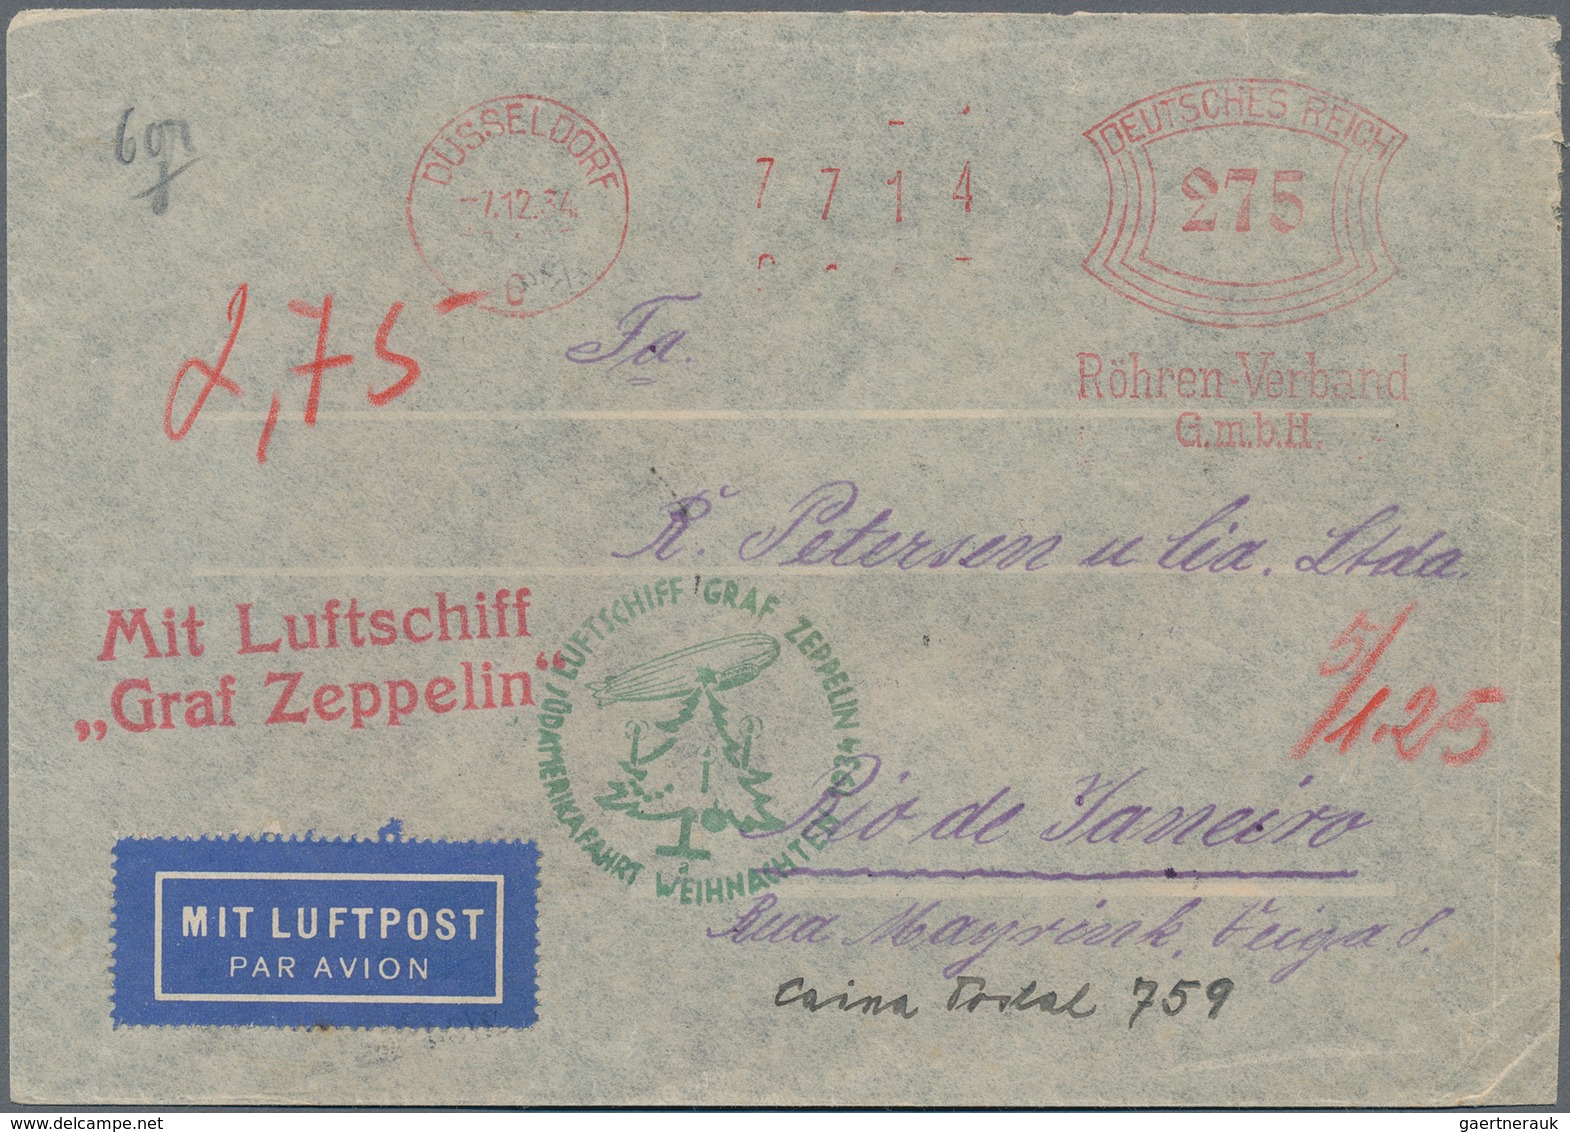 Zeppelinpost Deutschland: 1934, Christmas Trip, 12th South America Trip, Company Letter From Düsseld - Airmail & Zeppelin